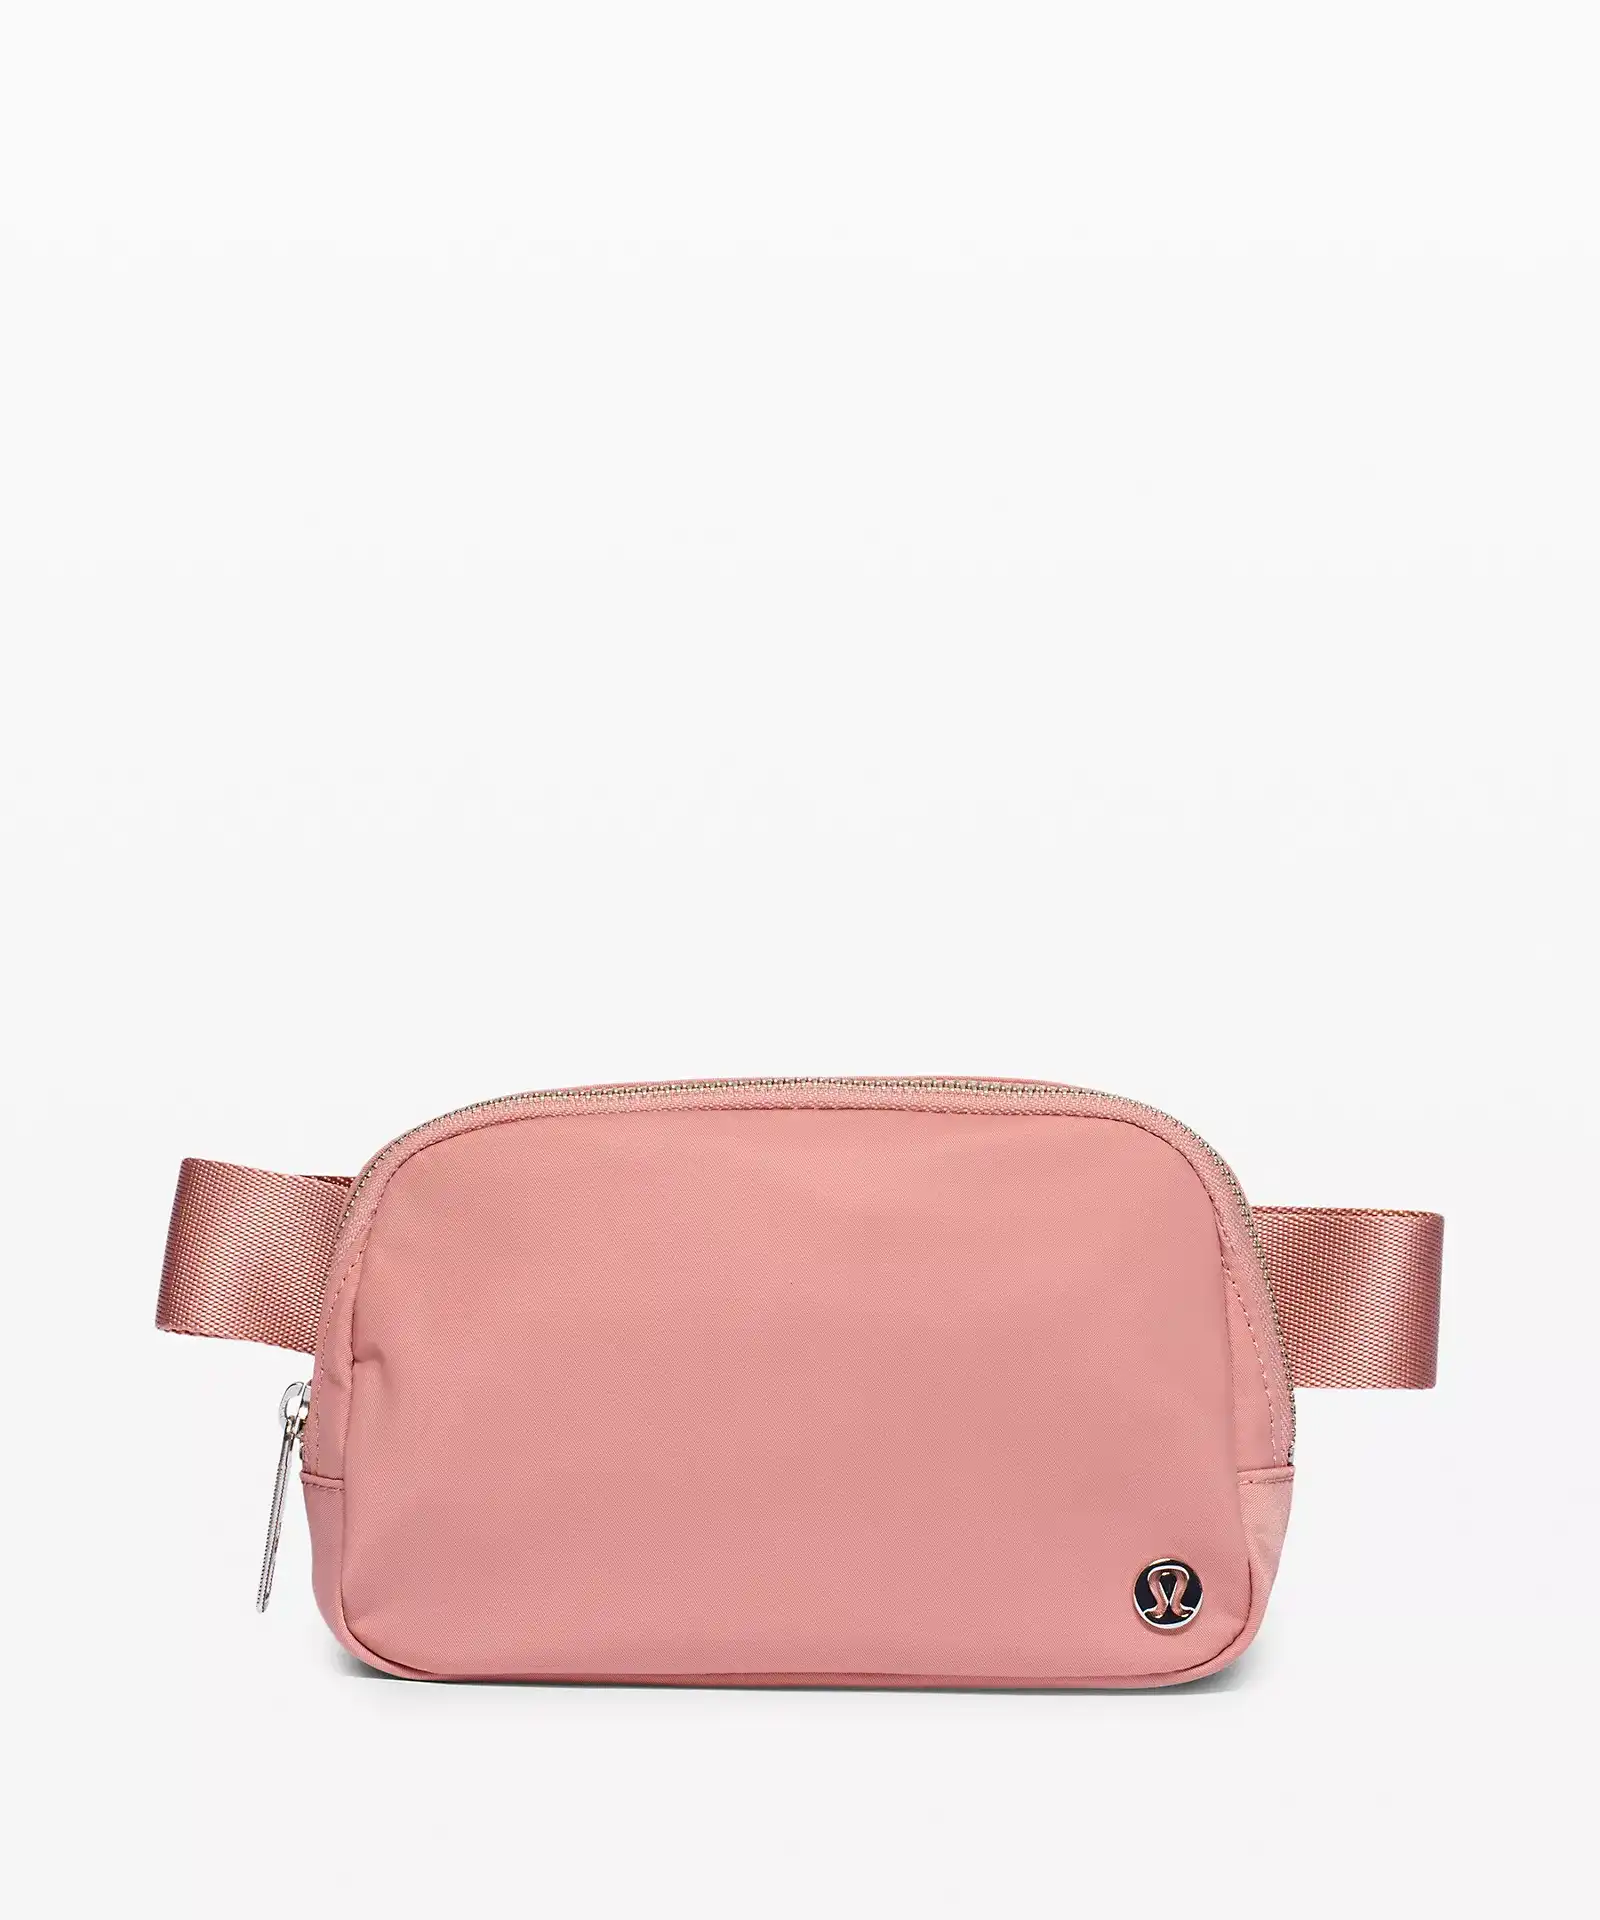 lululemon everywhere belt bag in pink